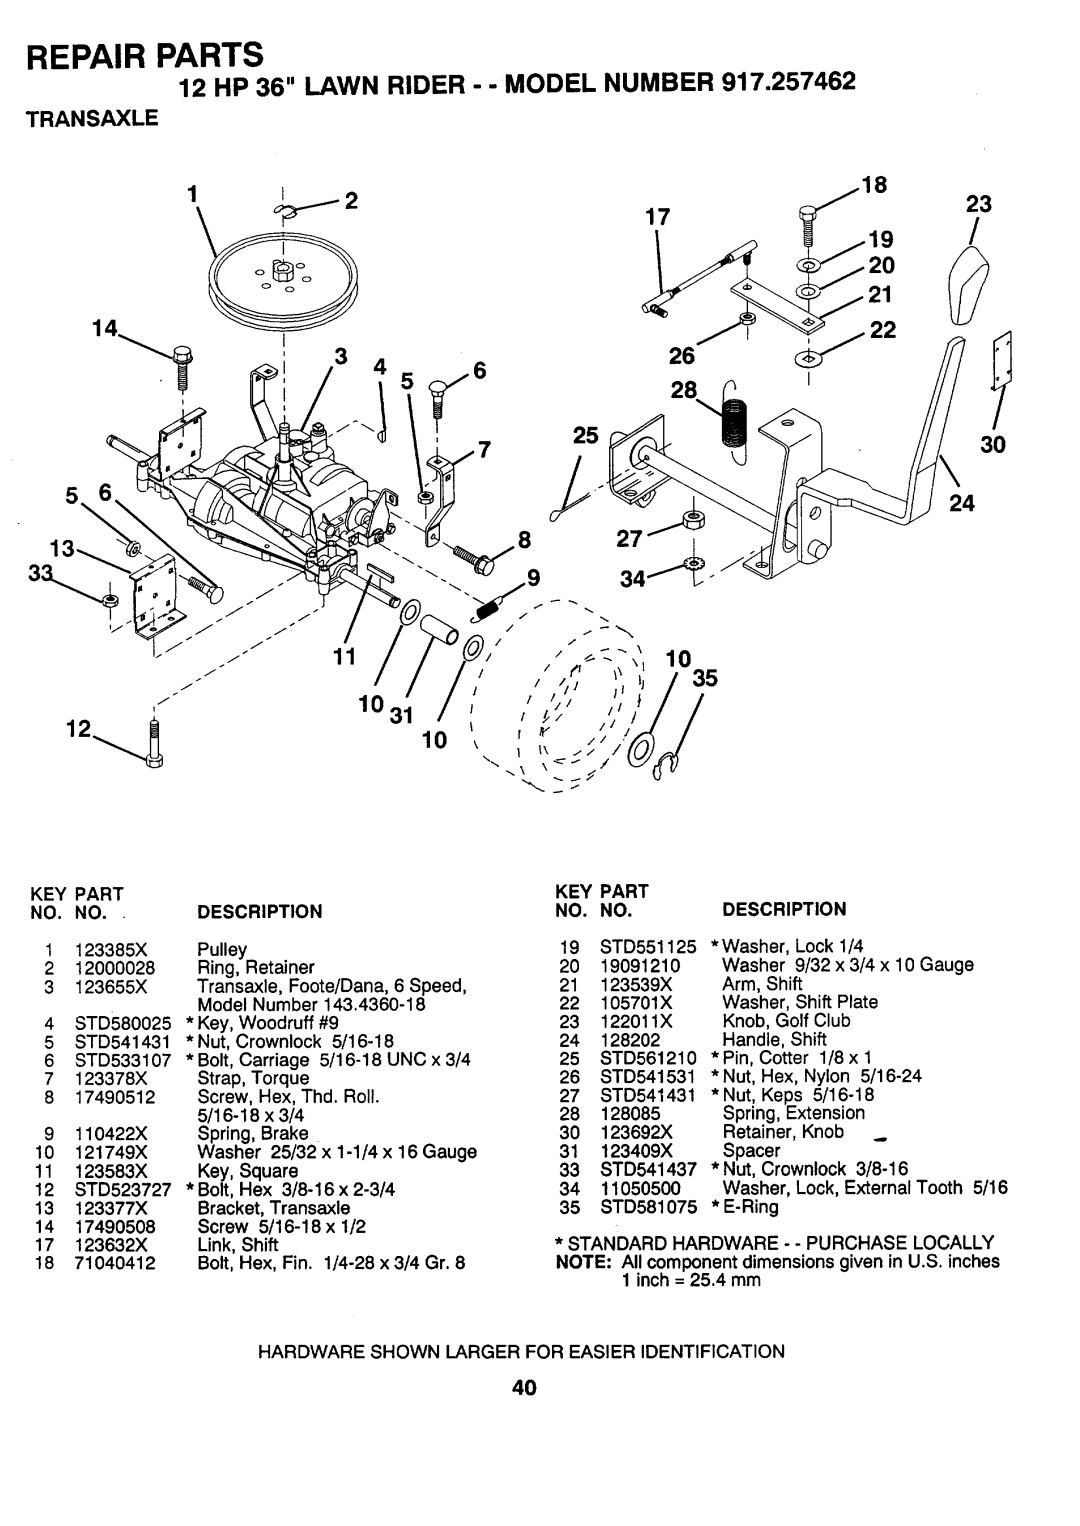 Sears 917.257462 manual 12 HP 36 LAWN RIDER --MODEL NUMBER, 9 21, 3 2530, 10 10, Transaxle, Repair Parts 